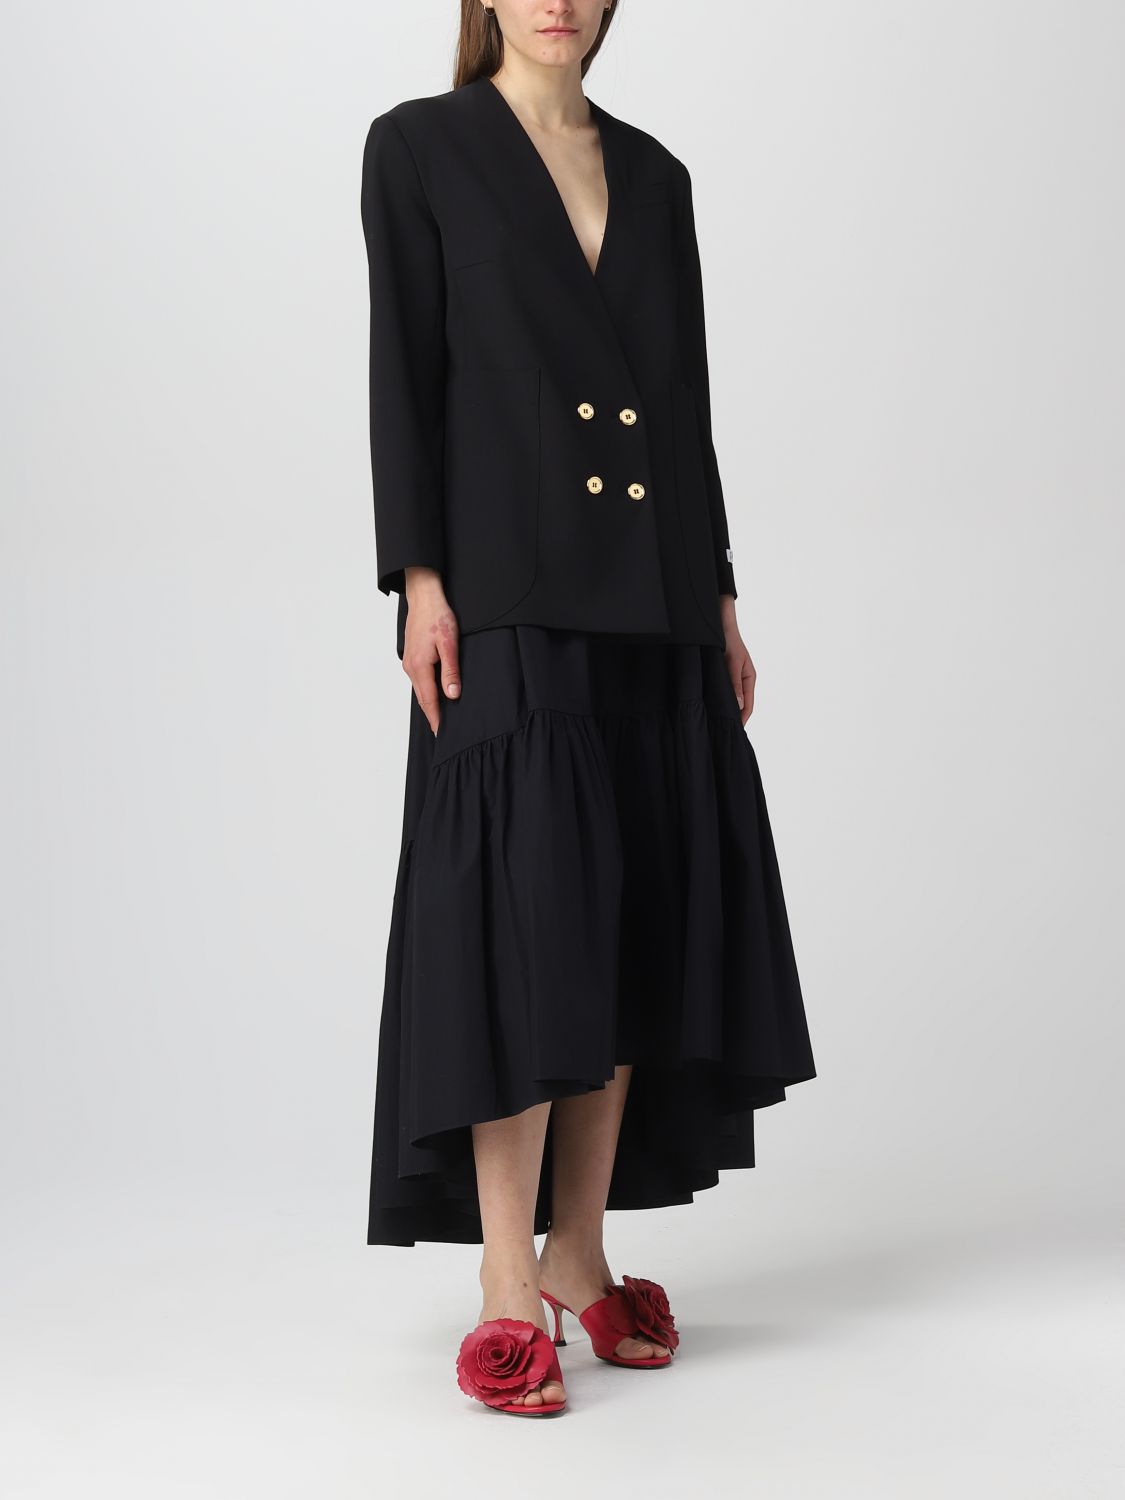 PATOU: jacket for woman - Black | Patou jacket JA0020103 online on ...